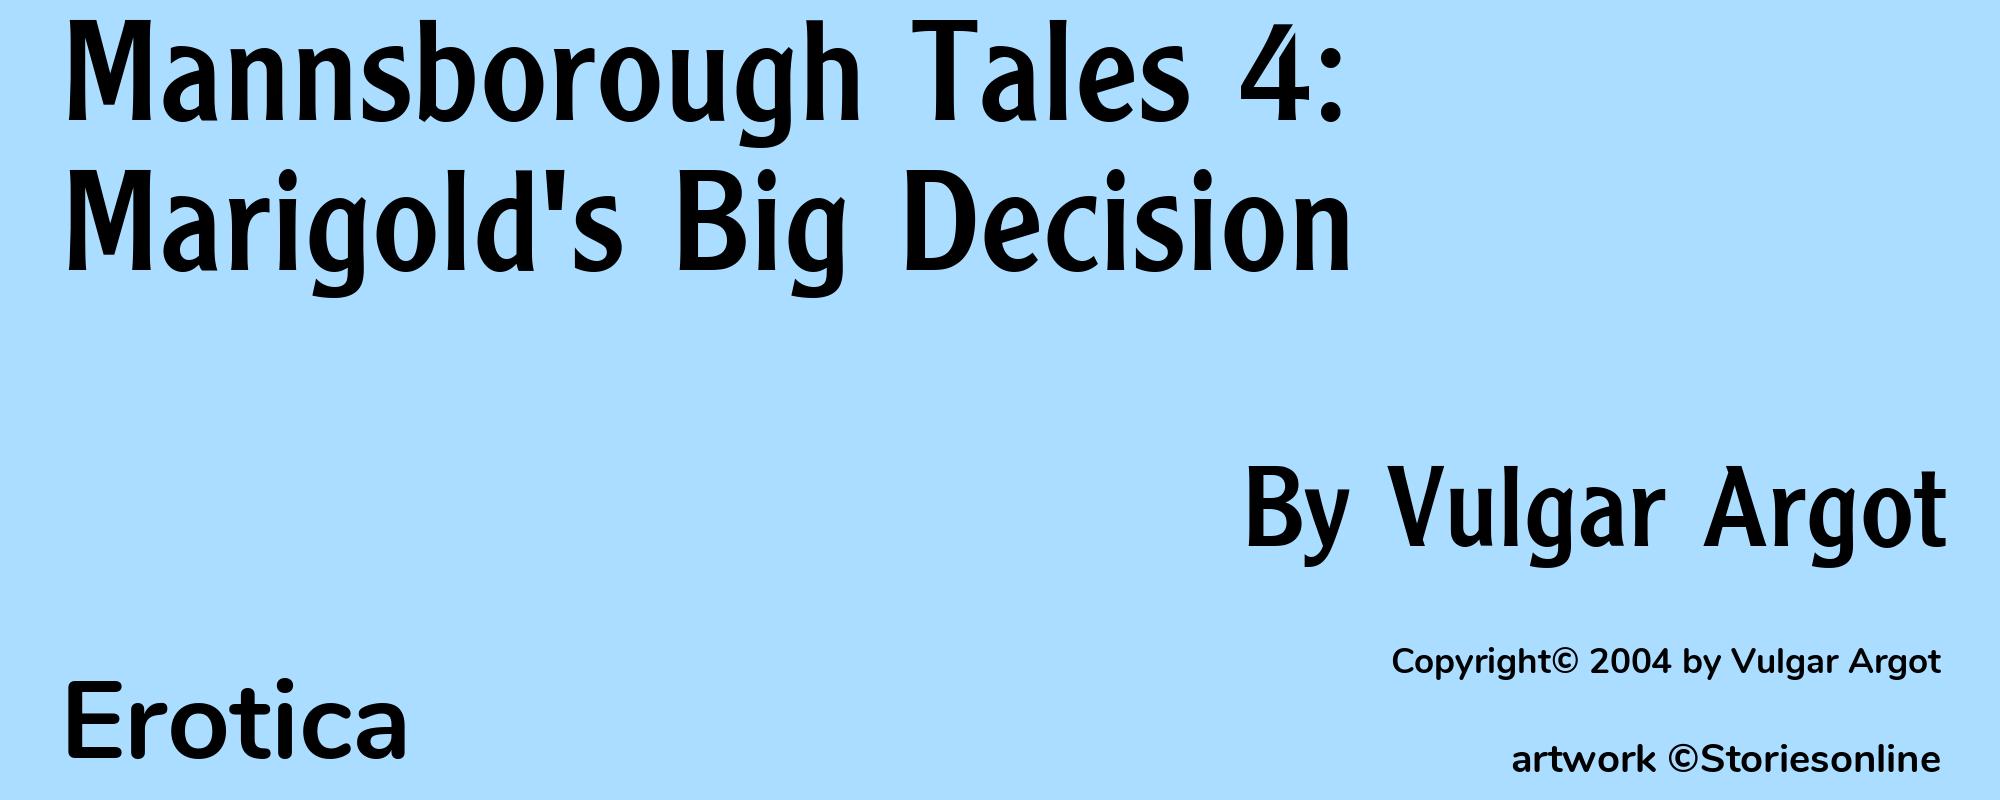 Mannsborough Tales 4: Marigold's Big Decision - Cover